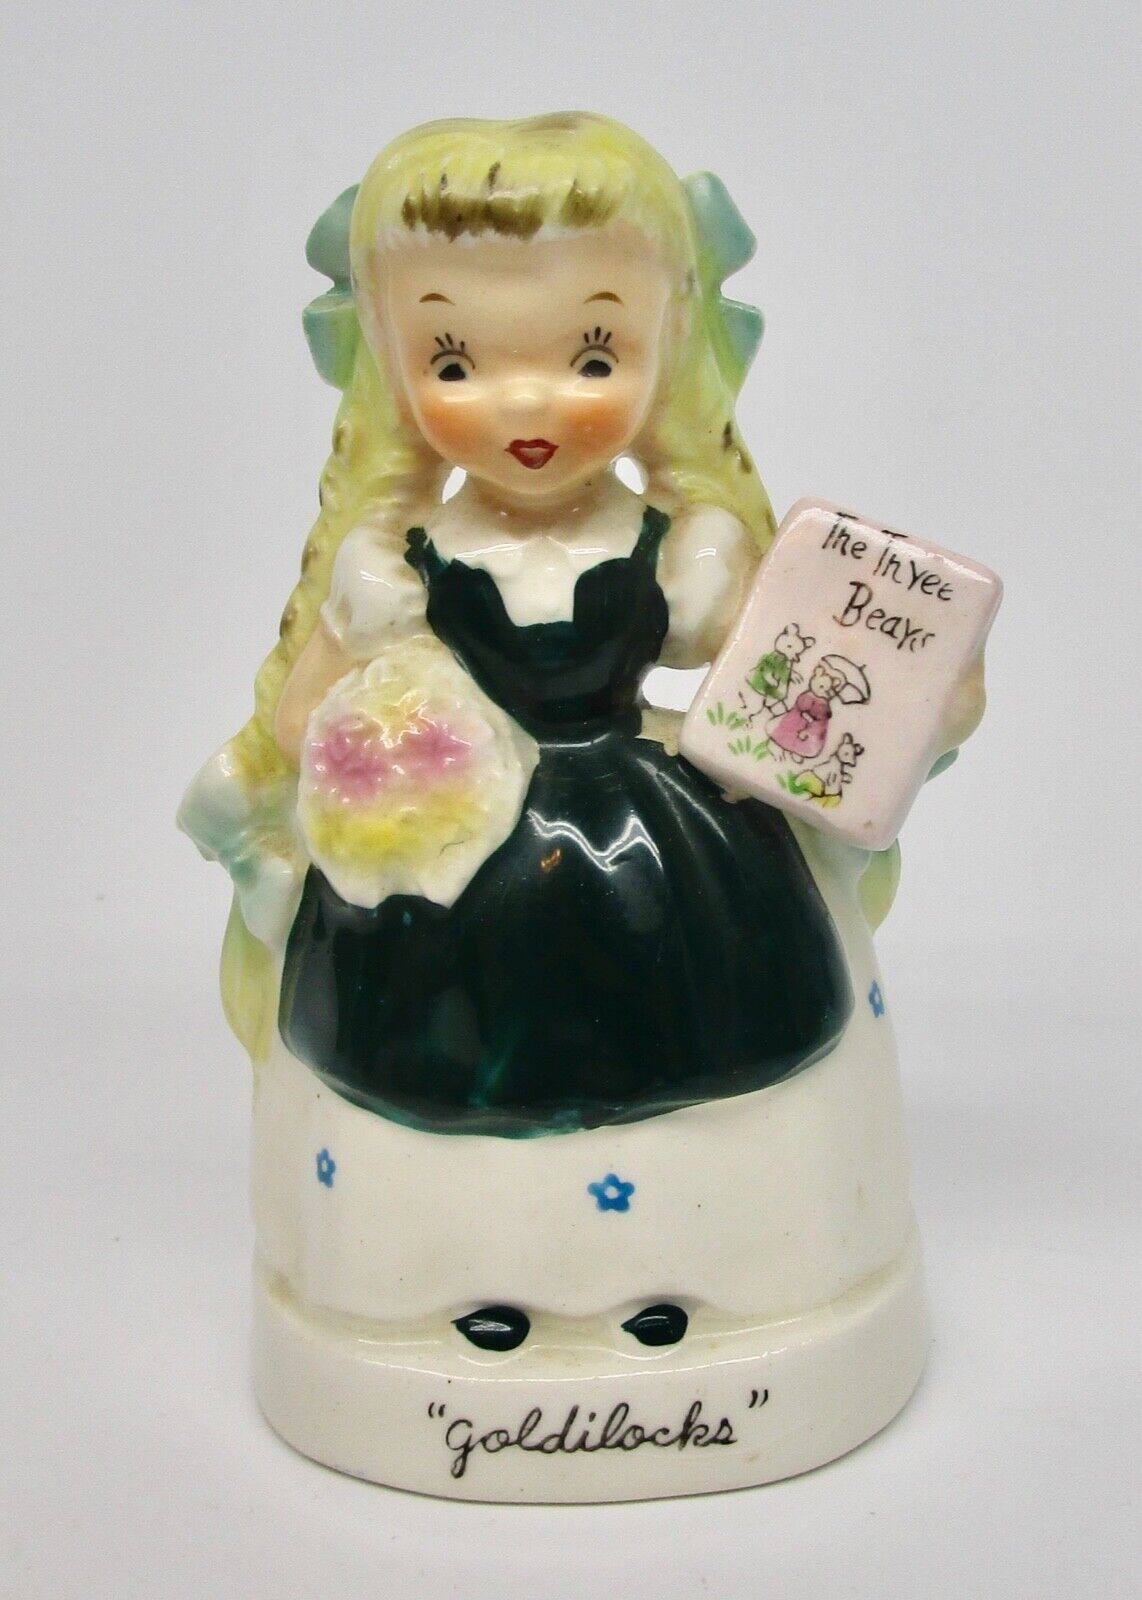 Vintage Goldilocks and the 3 bears figure fairytale Napco Japan A1943 figurine